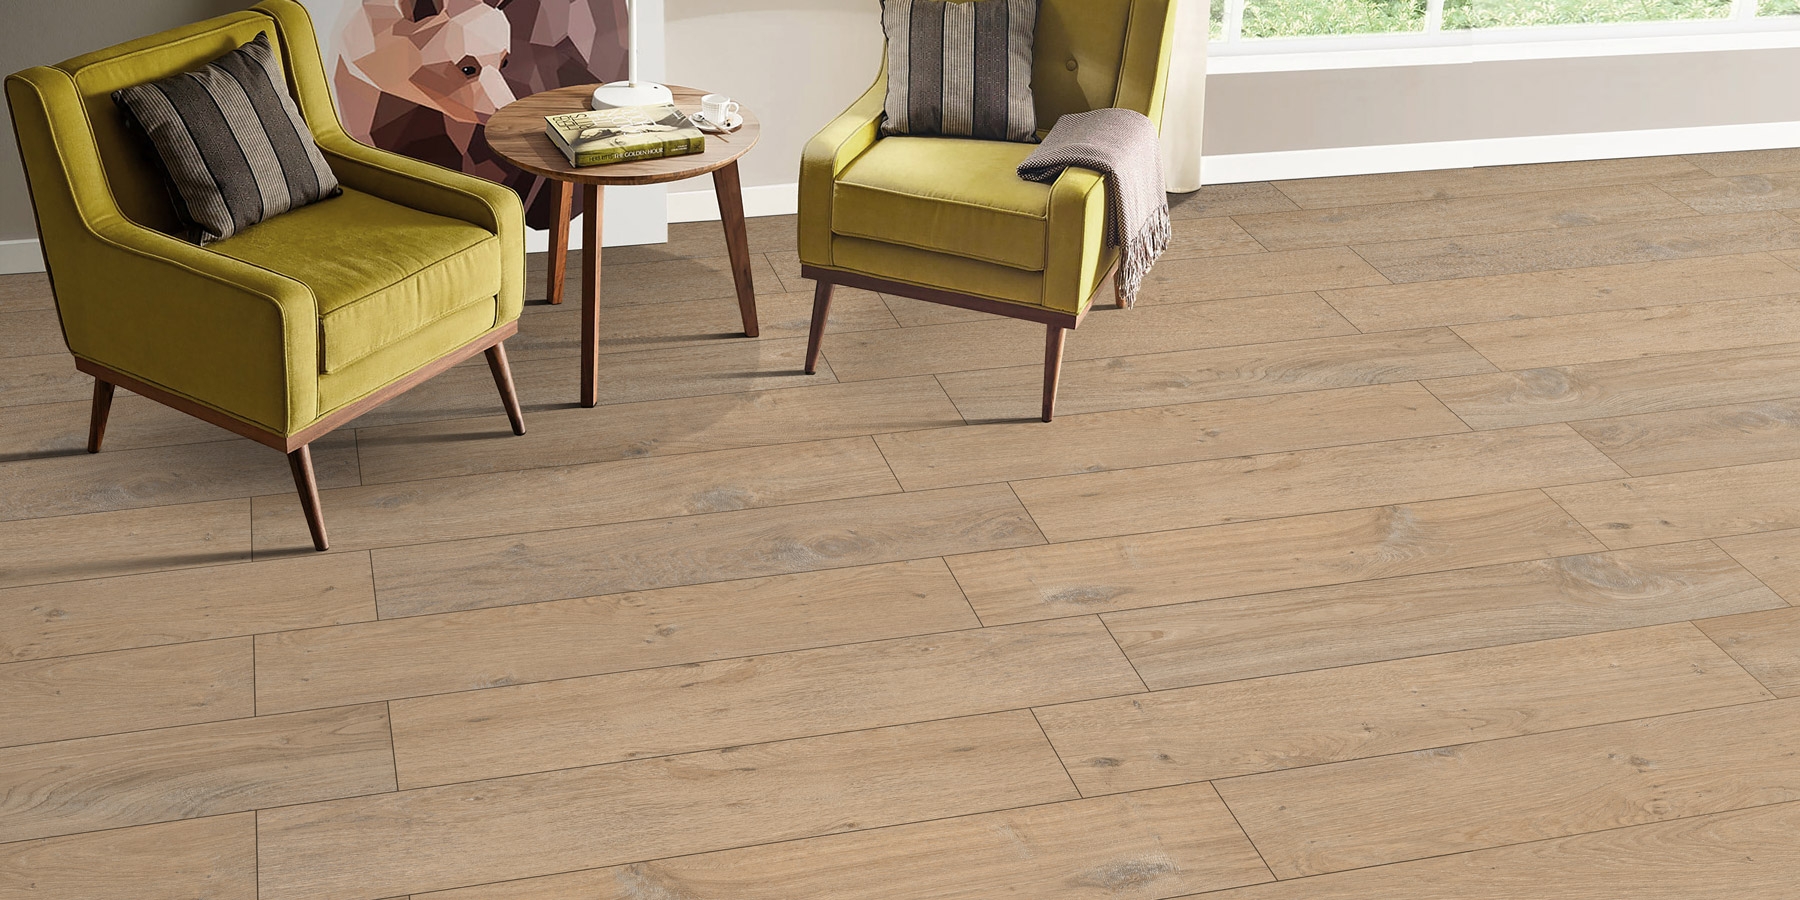 7 reasons for choosing wood look floor tiles - lavish ceramics